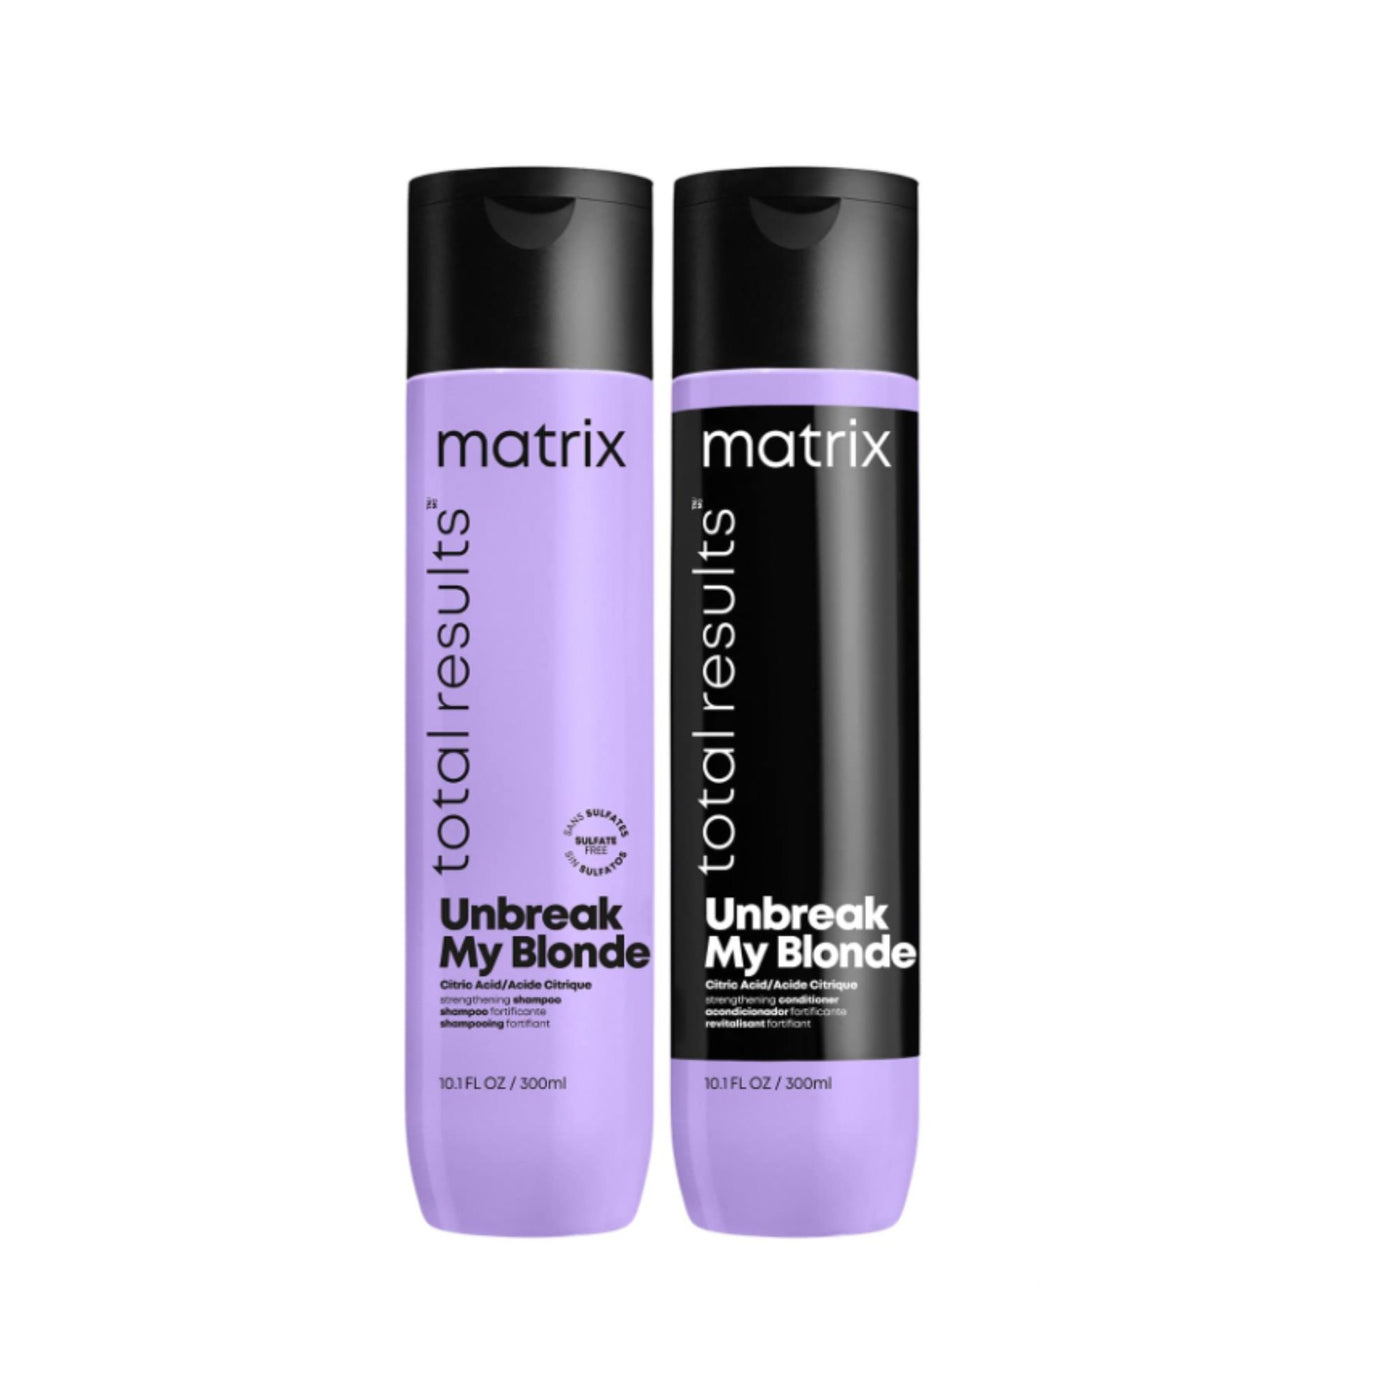 Matrix Unbreak My Blonde Strenthening Care For Lightened Hair.  Shampoo & Conditioner Duo Set